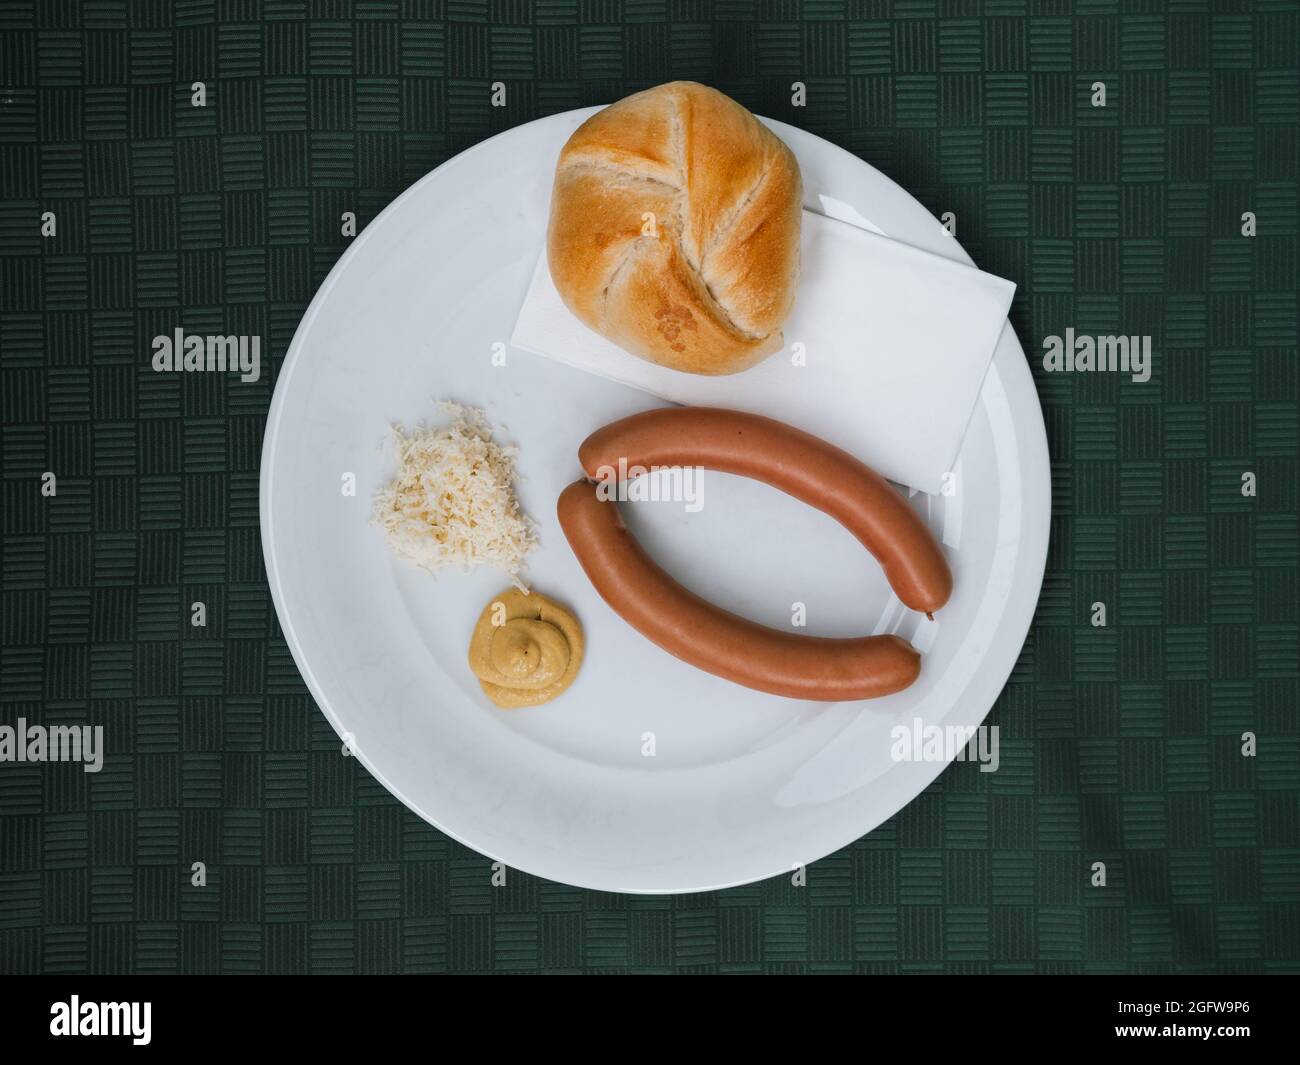 Frankfurter, Wiener or Vienna Sausage with Mustard, Horseradish and a Kaiser Roll Stock Photo